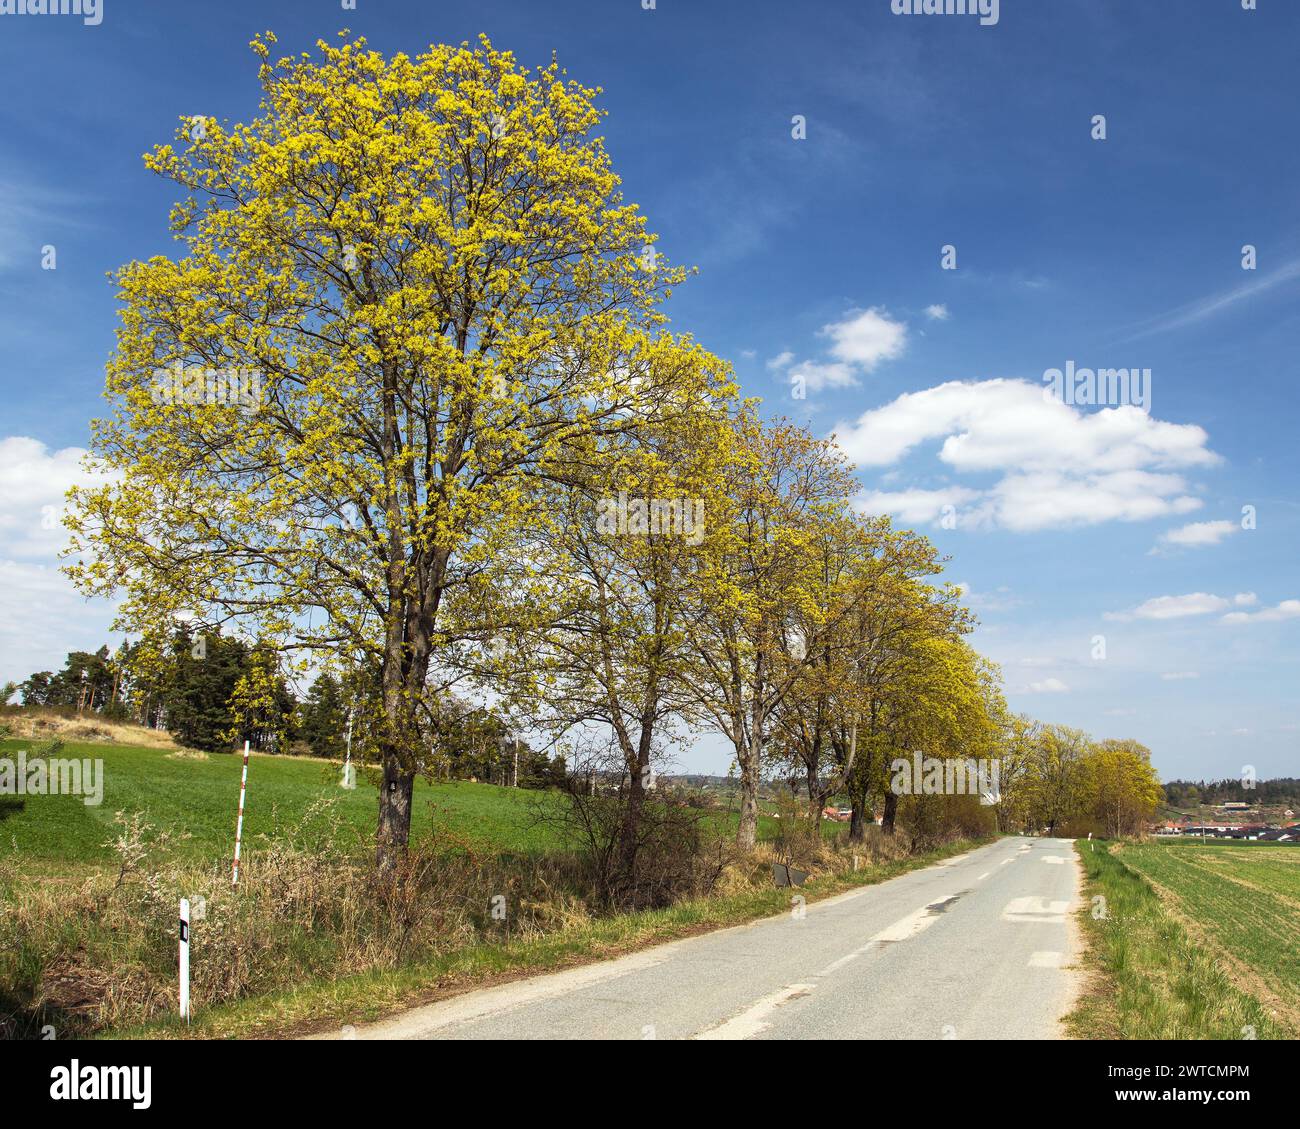 Straße mit blühender Ahornallee und wunderschönem Himmel, Frühlingslandschaft Stockfoto